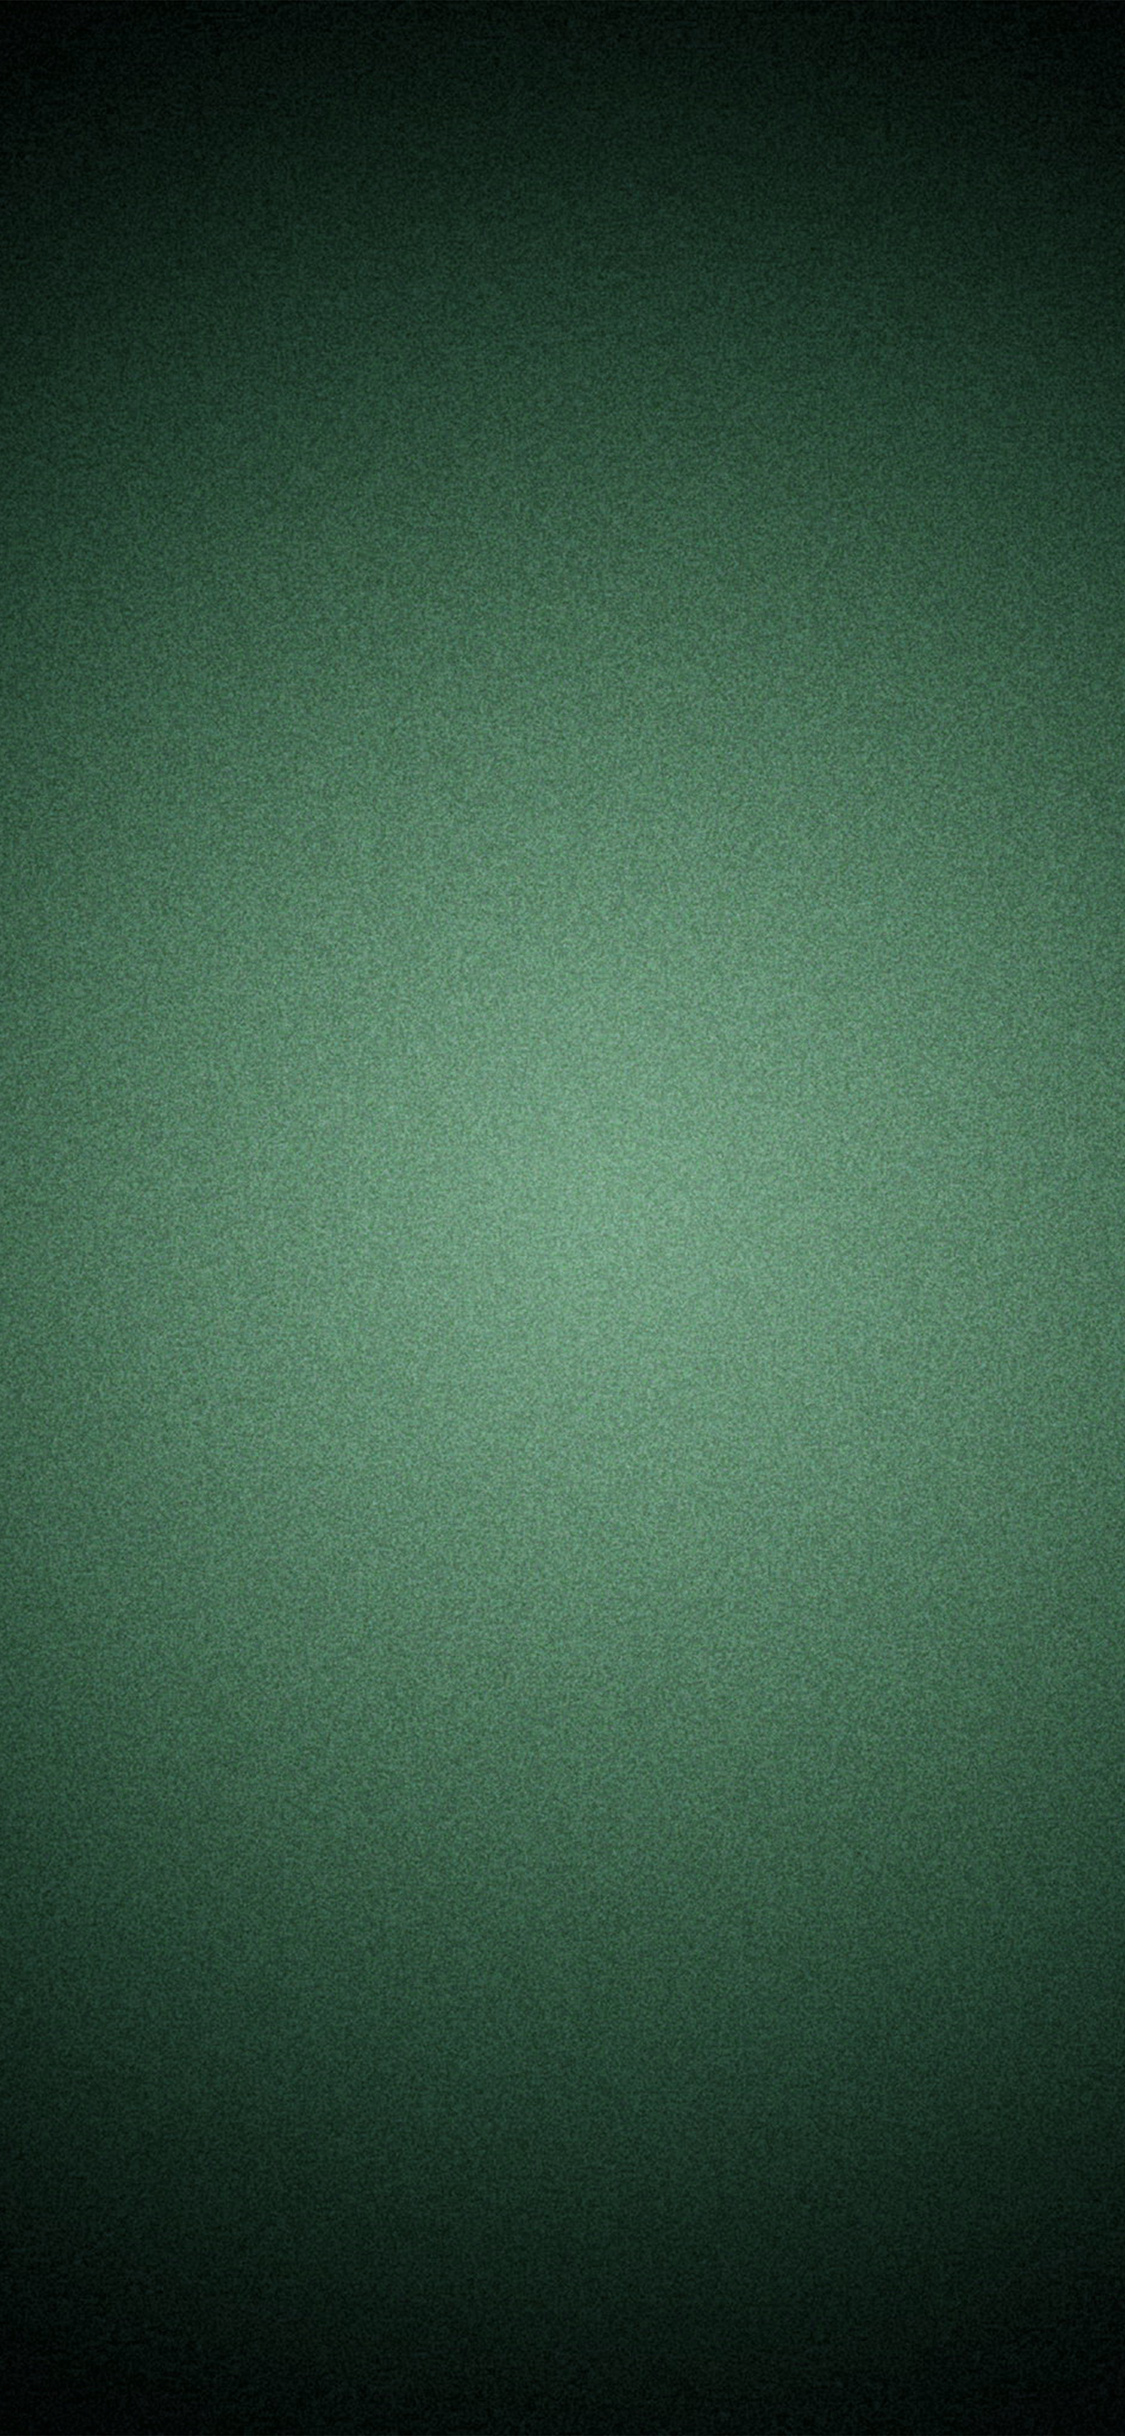 iPhone X wallpaper. circle vignette dark green pattern